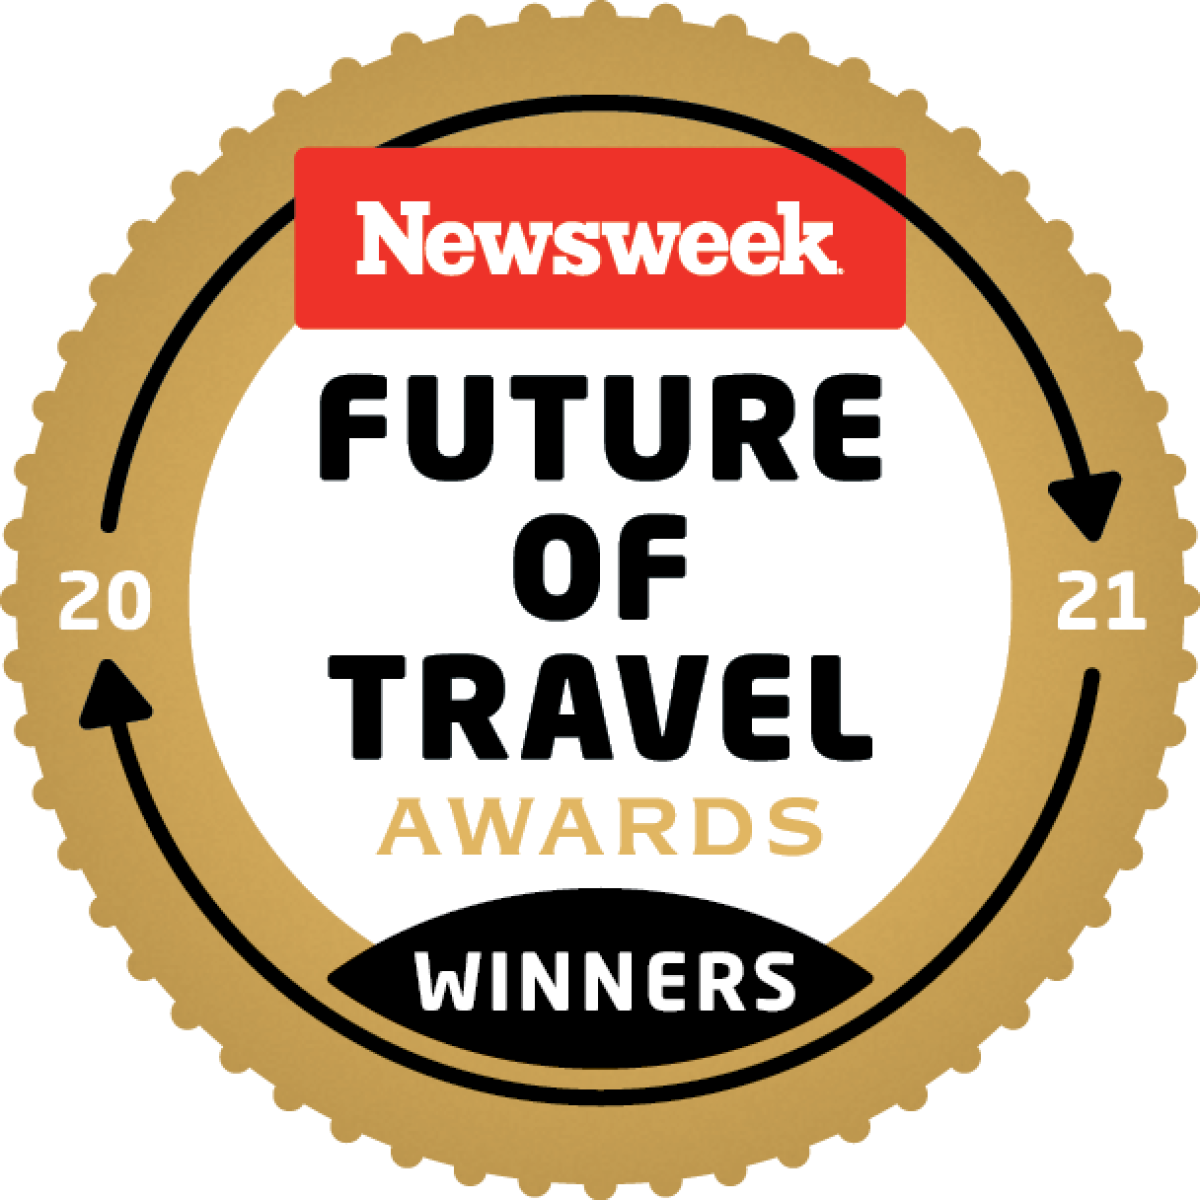 Future of Travel Awards 2021 Winners